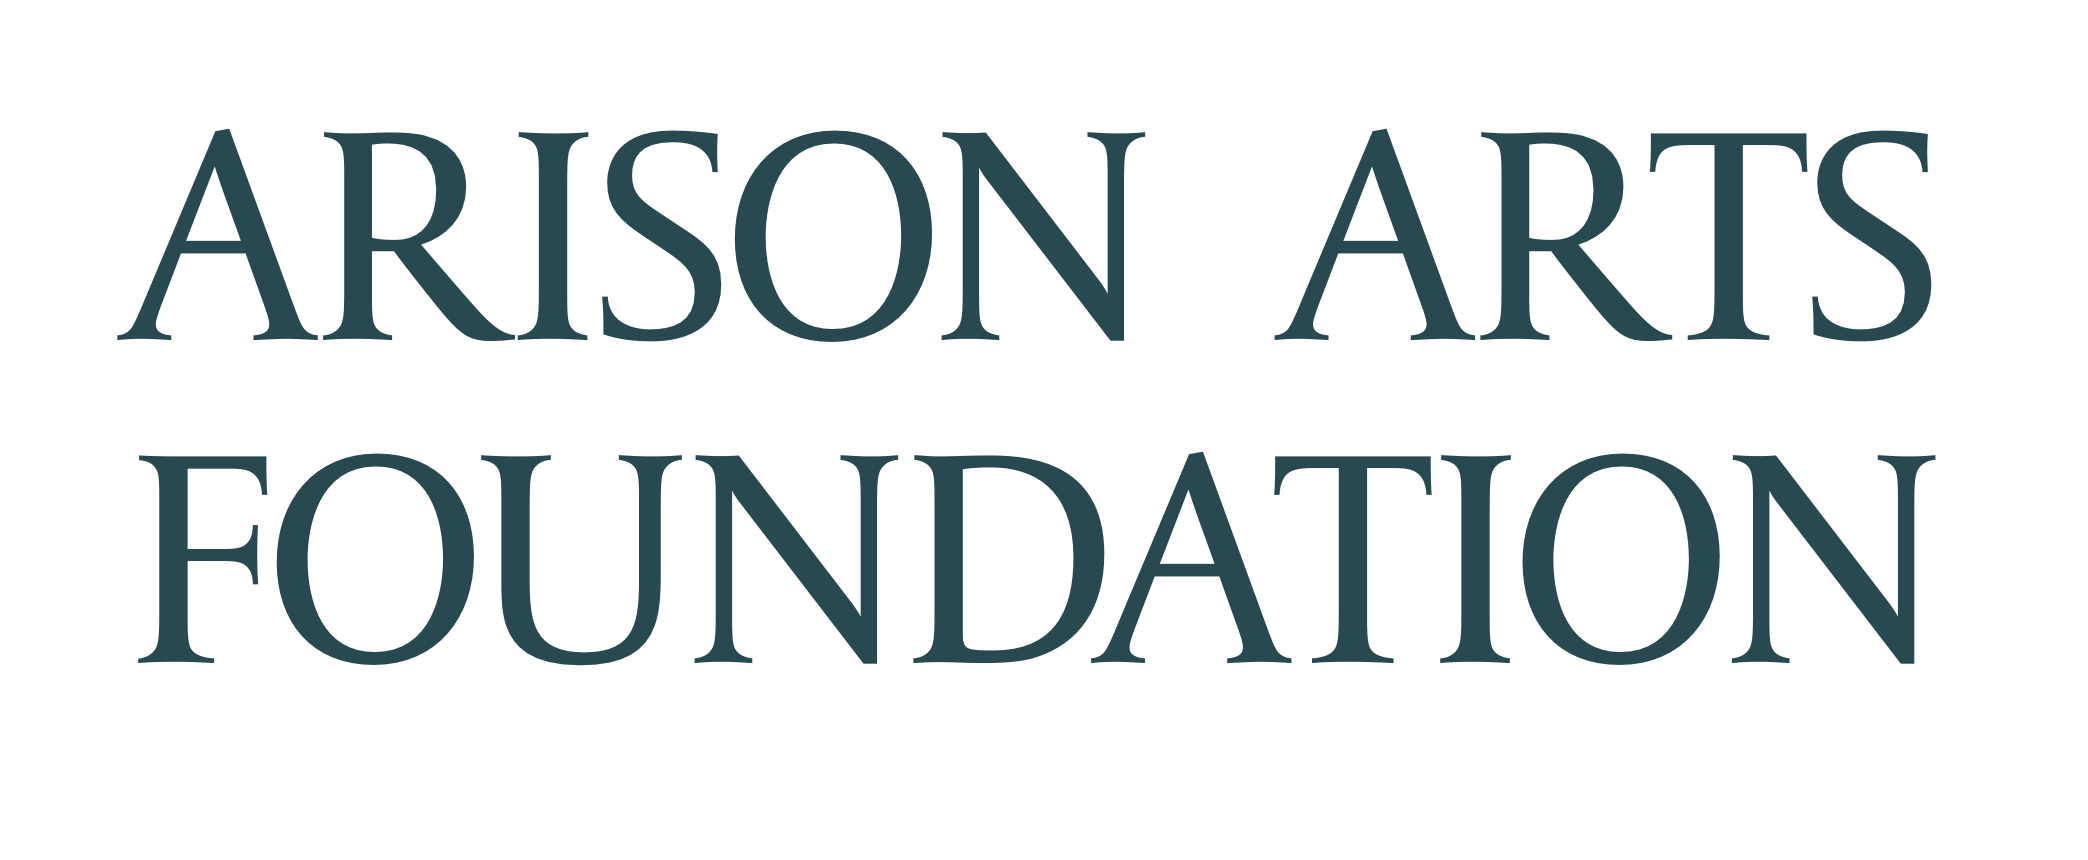 Arison_arts_foundation_logo.png